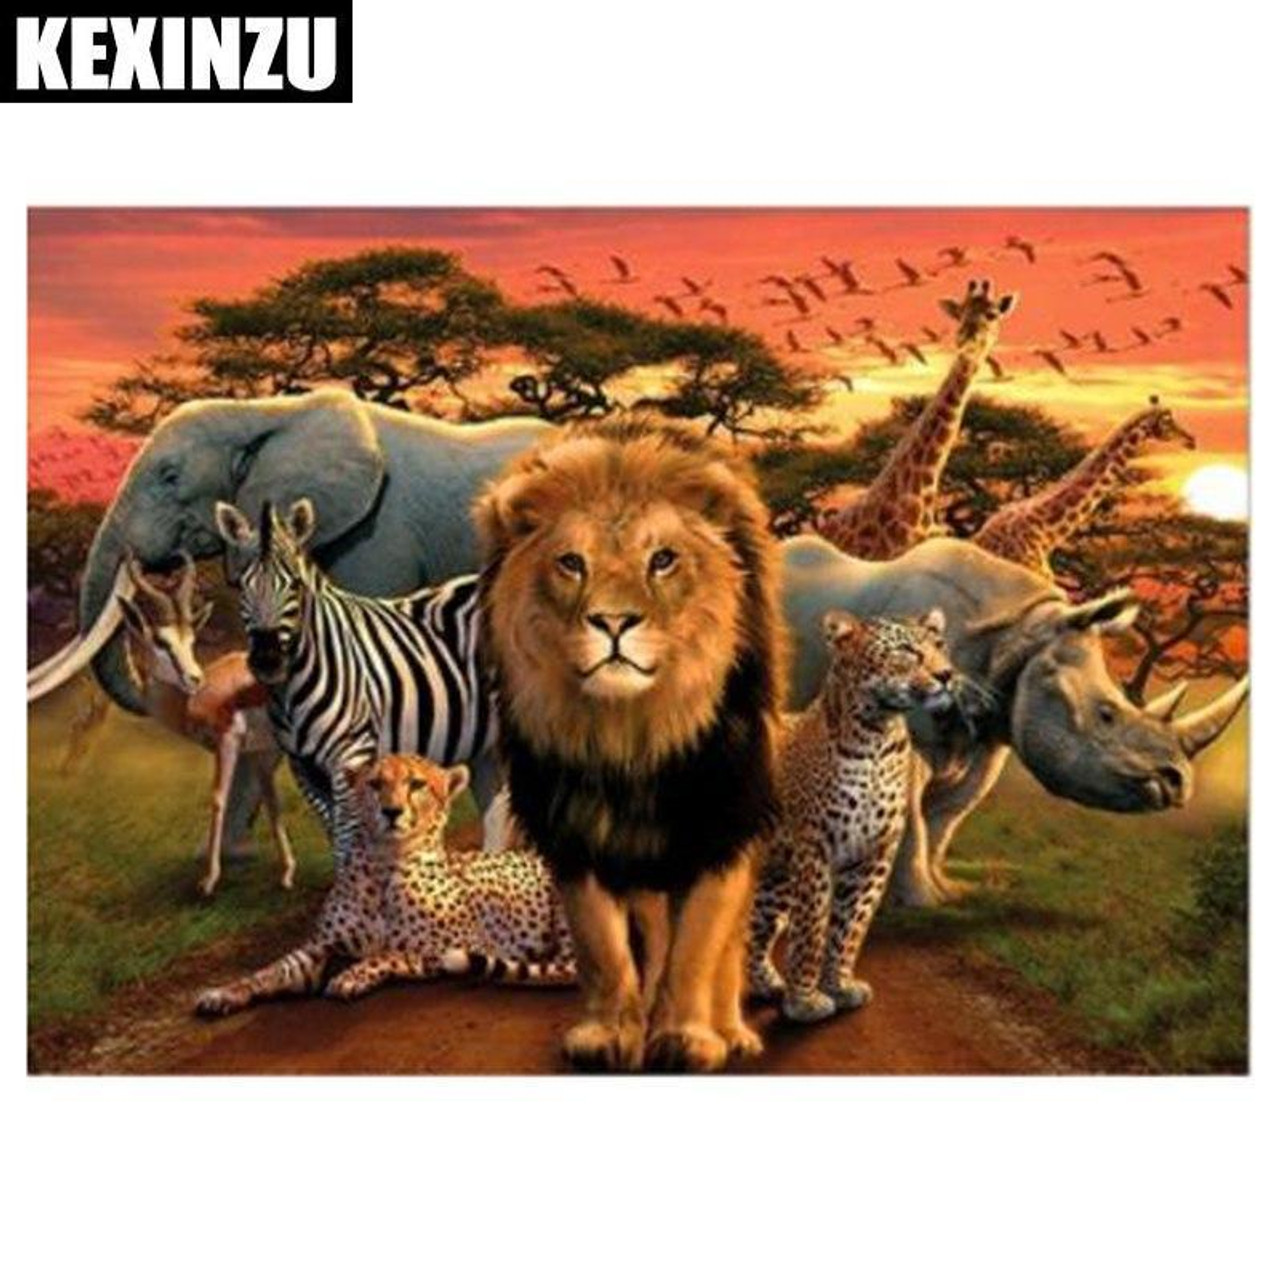 5D Diamond Painting Leopard & Animals of the Jungle Kit